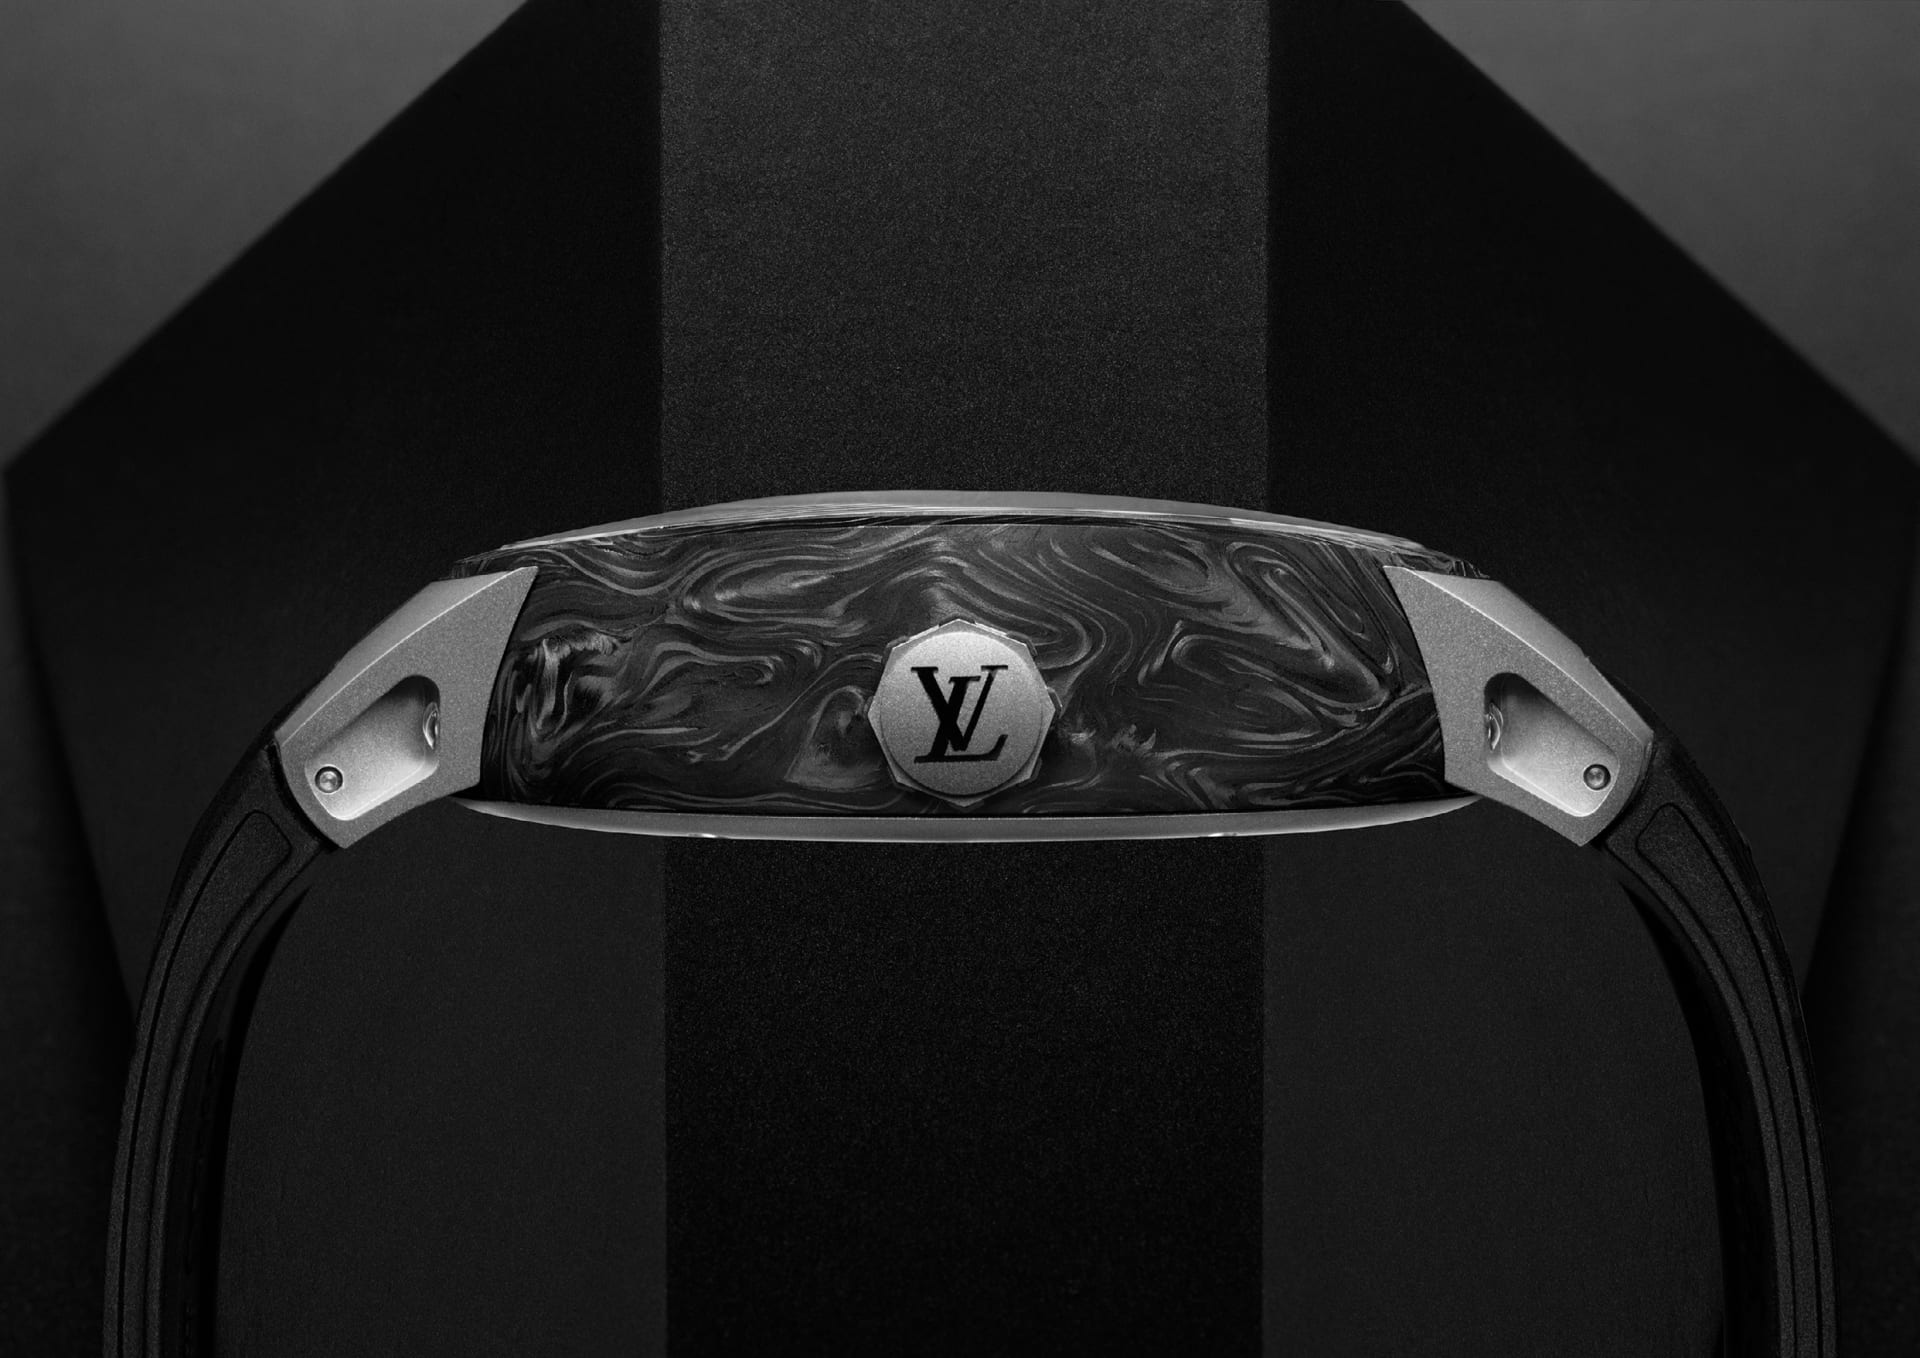 The Louis Vuitton Tambour Curve Flying Tourbillon Is A €280,000